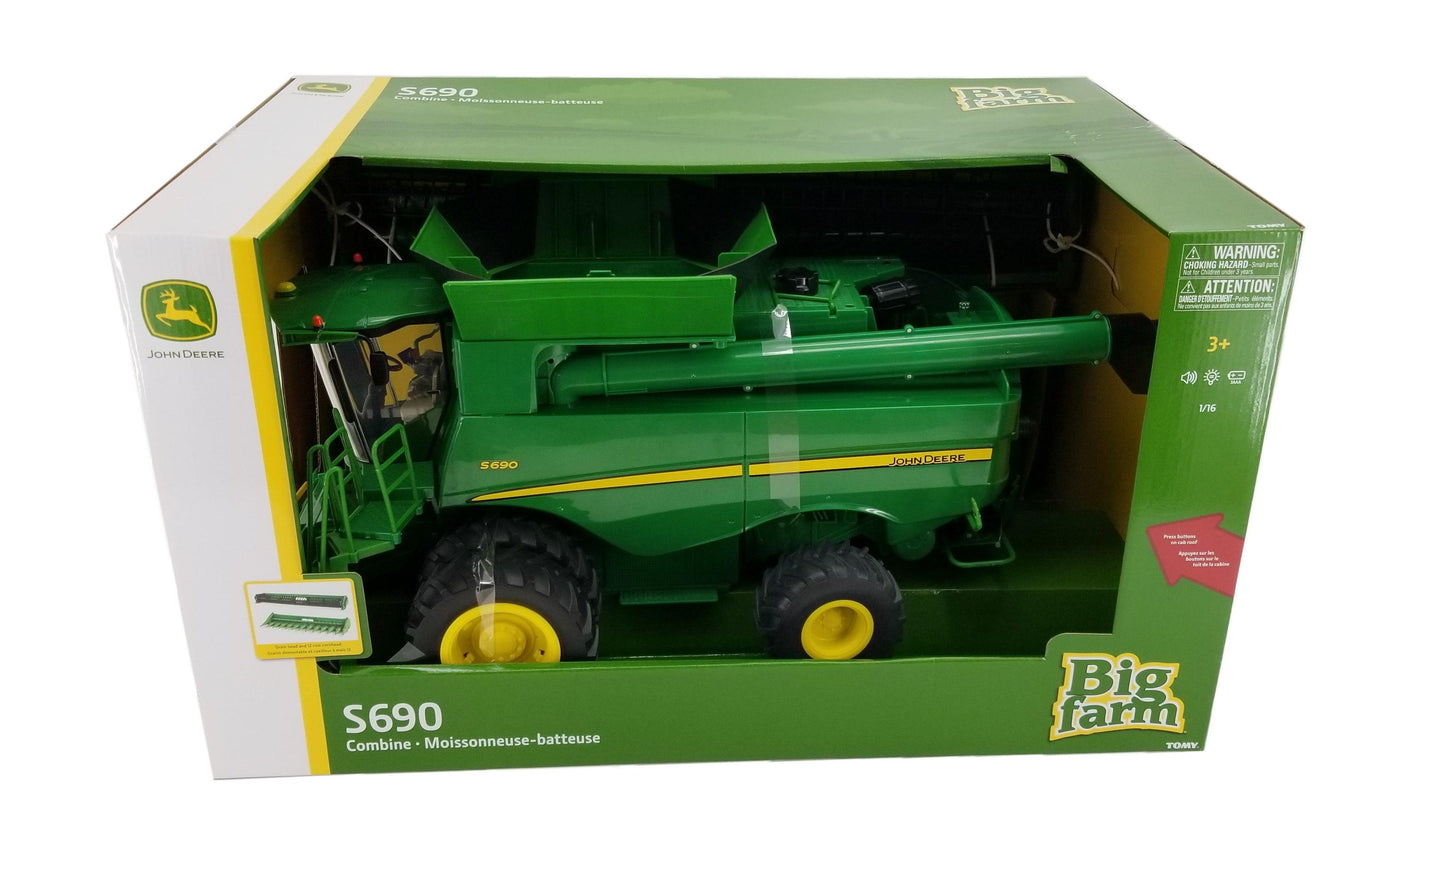 1/16 John Deere Big Farm S690 Combine with Corn and Draper Head - LP71700